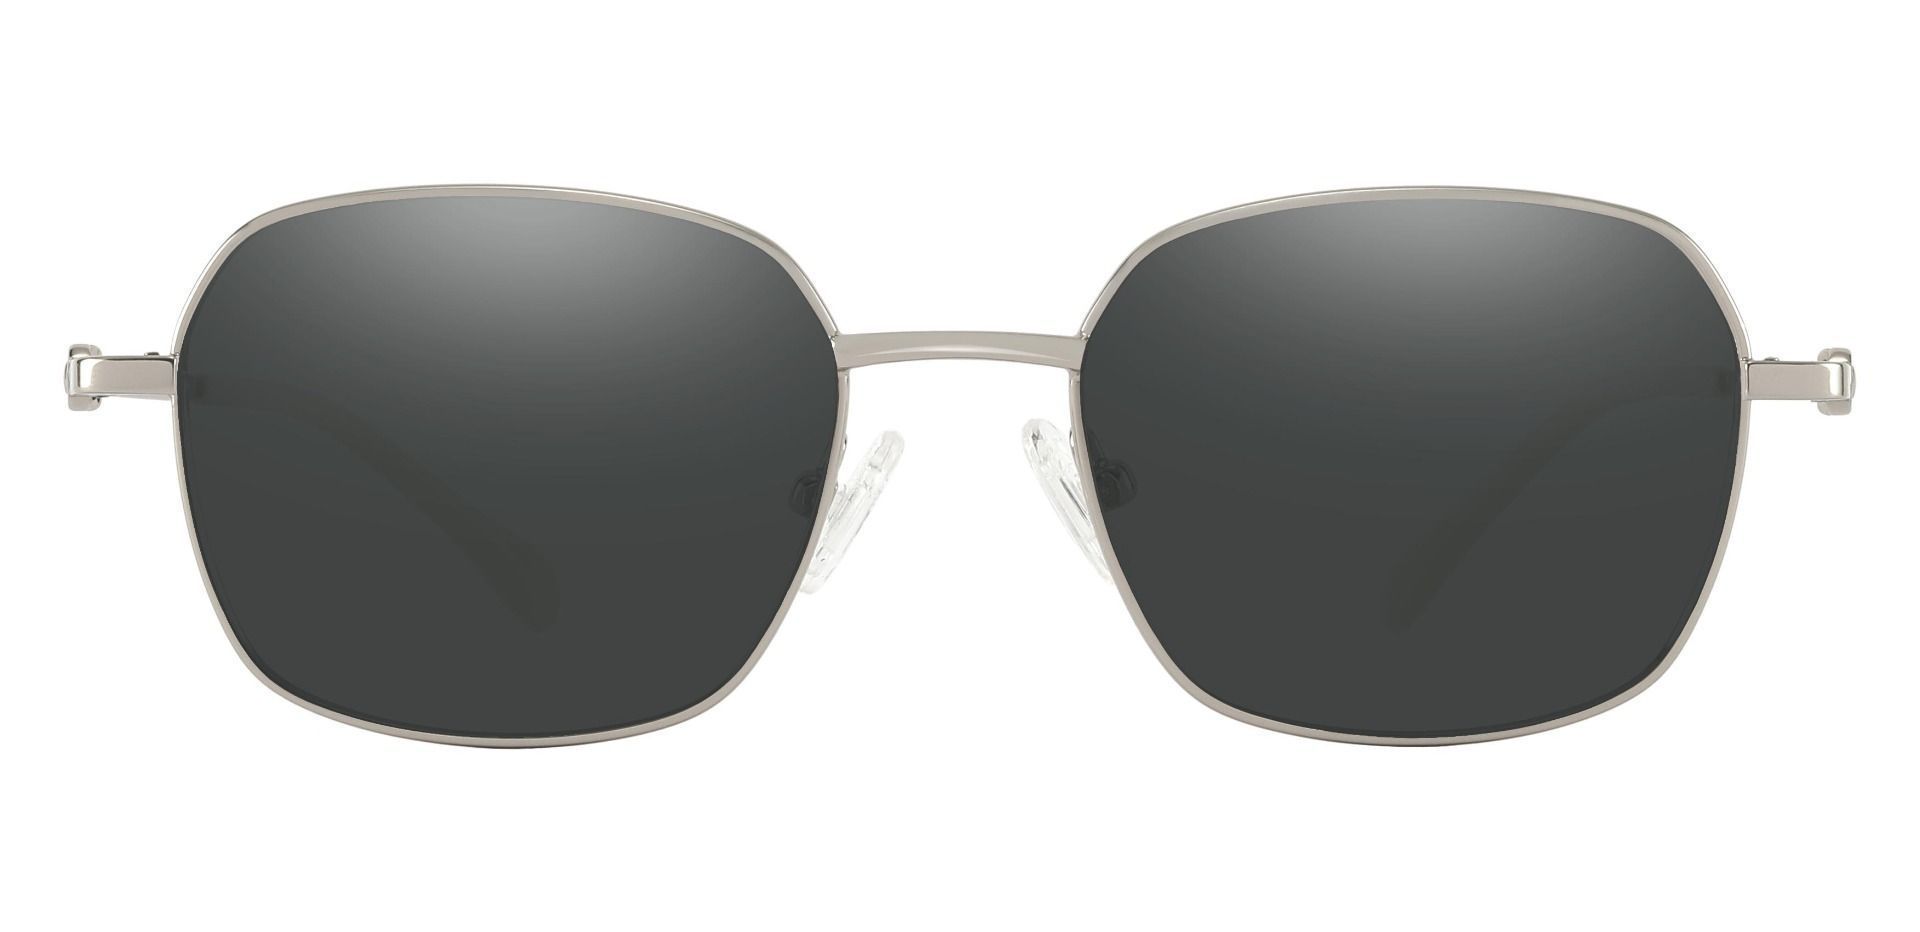 Averill Geometric Prescription Sunglasses - Silver Frame With Gray Lenses